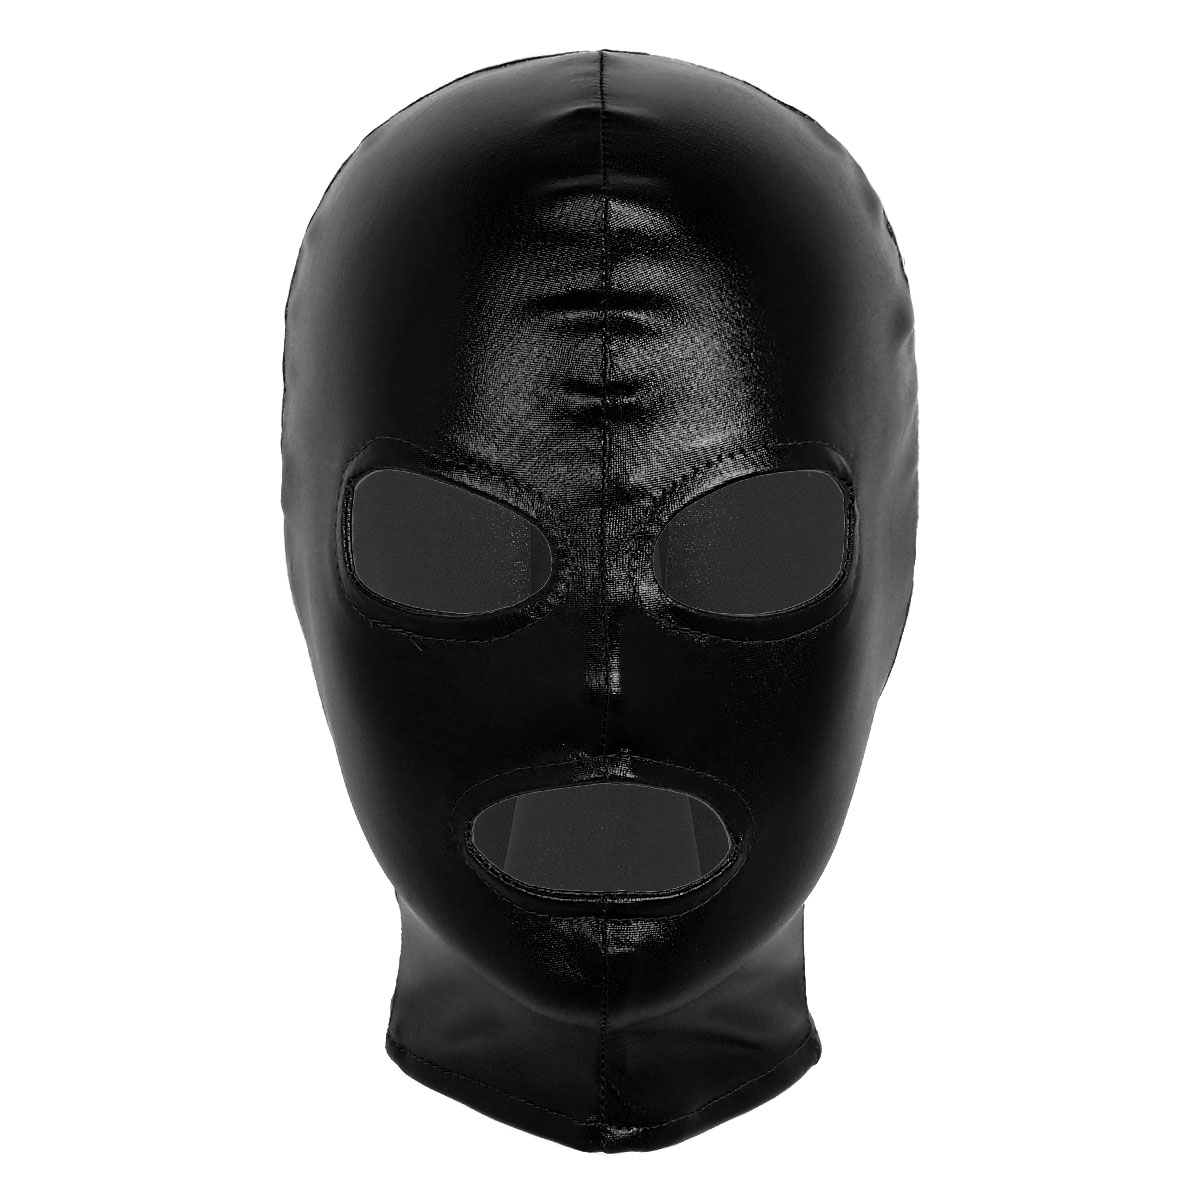 US Unisex Adults Blindfold Mask Headgear Hood Head Cover Full Face Mask Costume